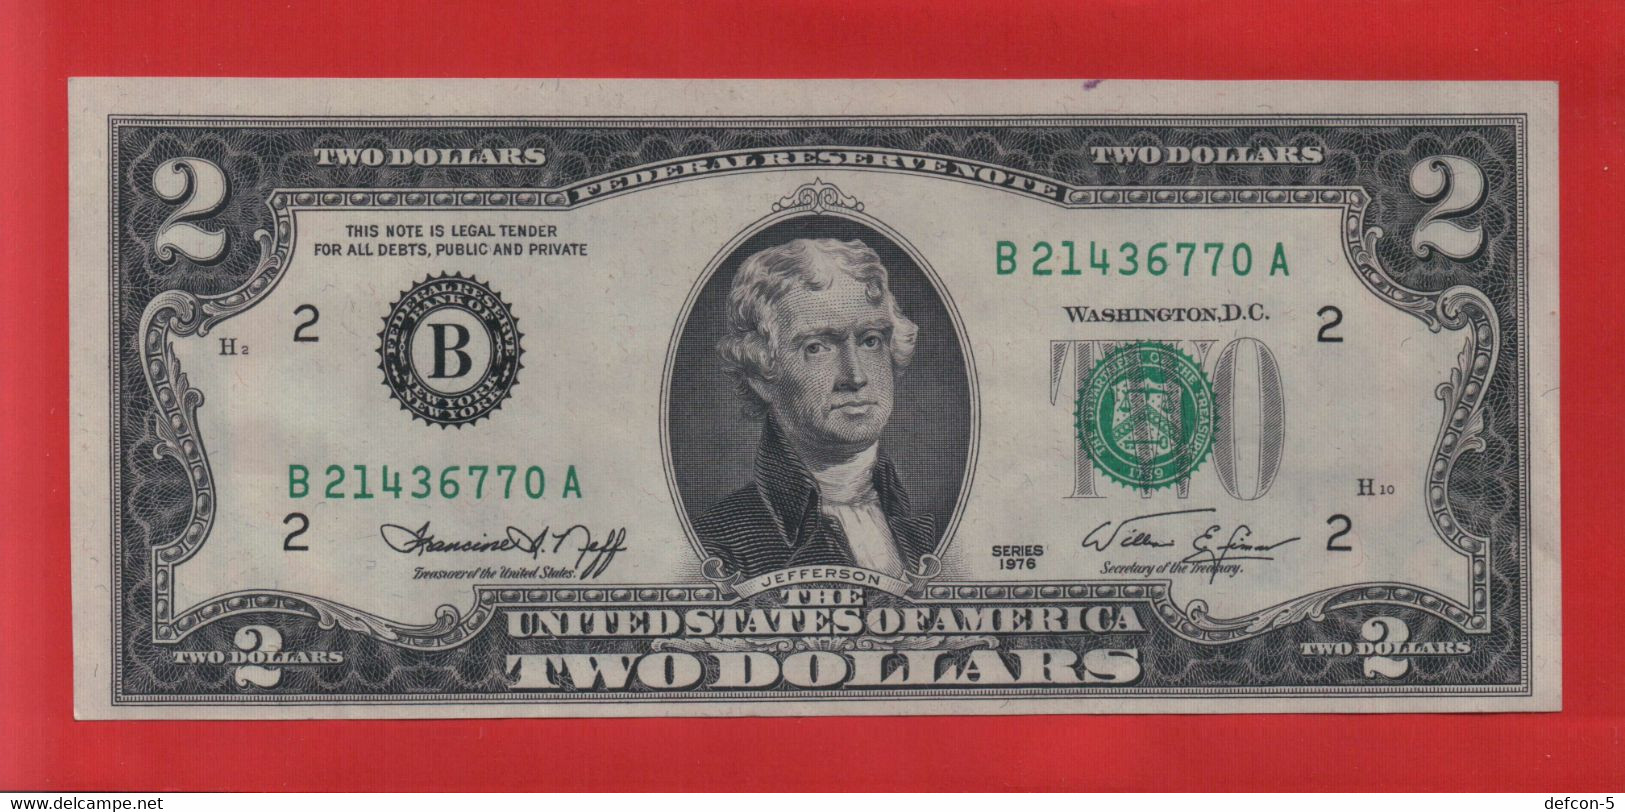 Rarität ! 2 US-Dollar [1976] > B 21436770 A < {$009-002} - National Currency